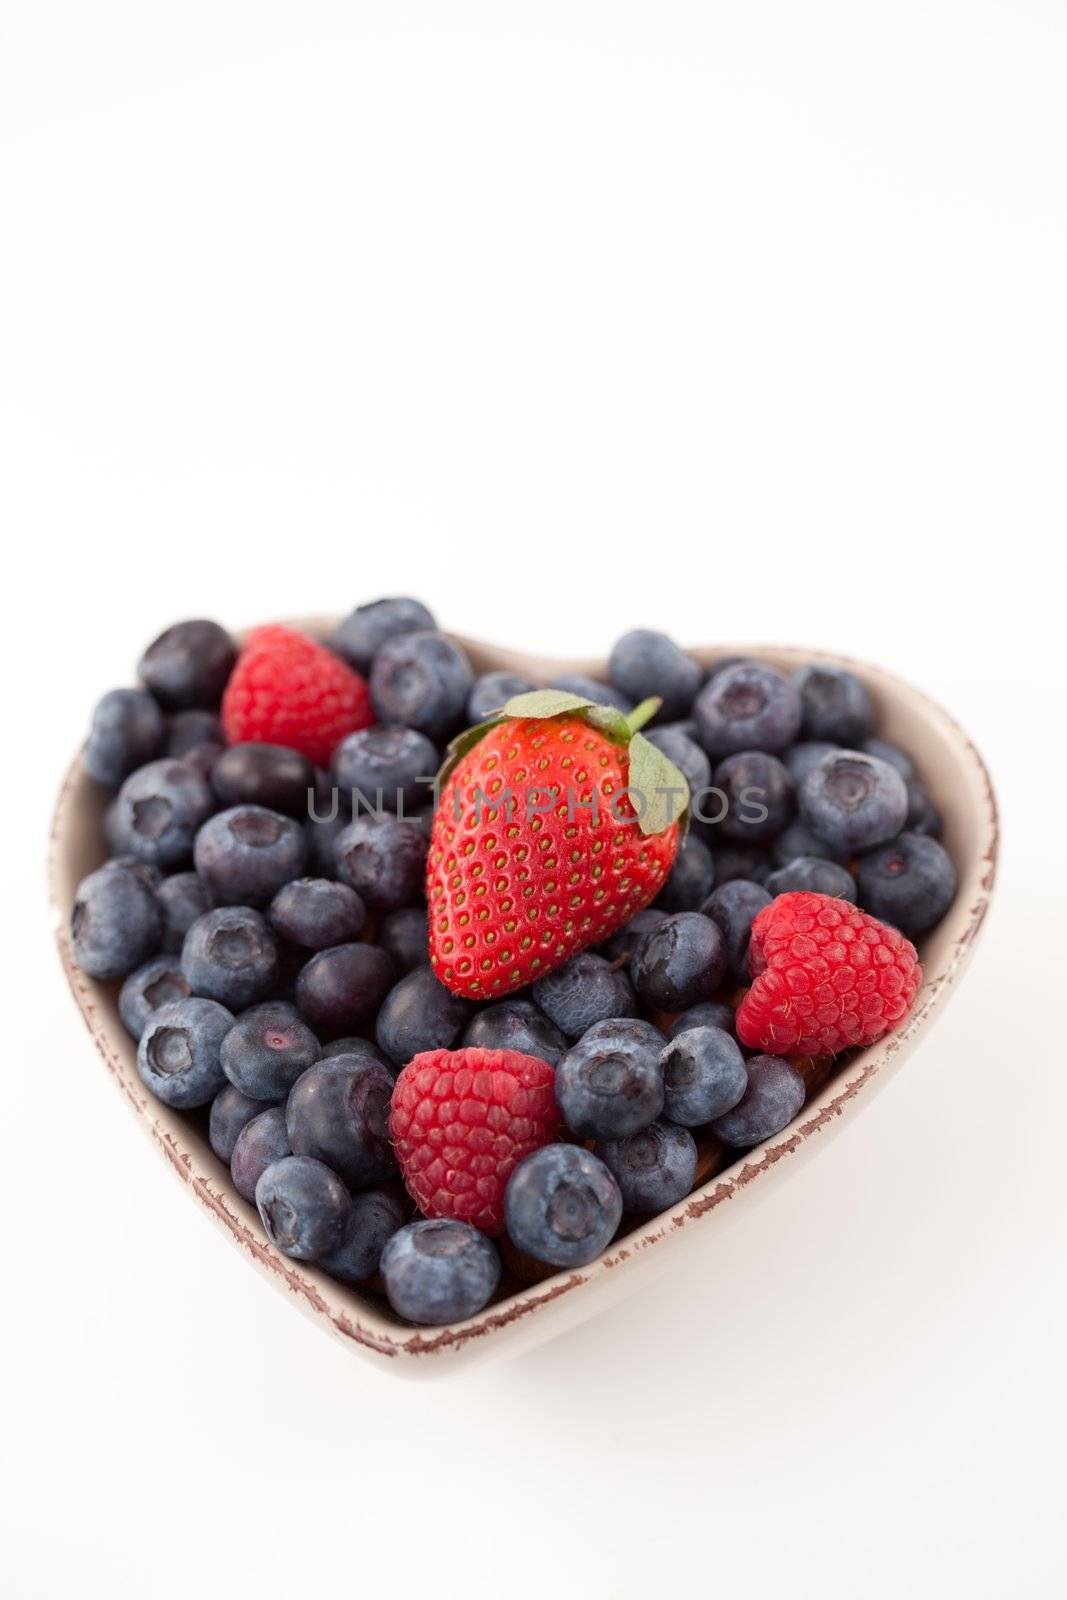 Fruits in a heart shaped bowl by Wavebreakmedia